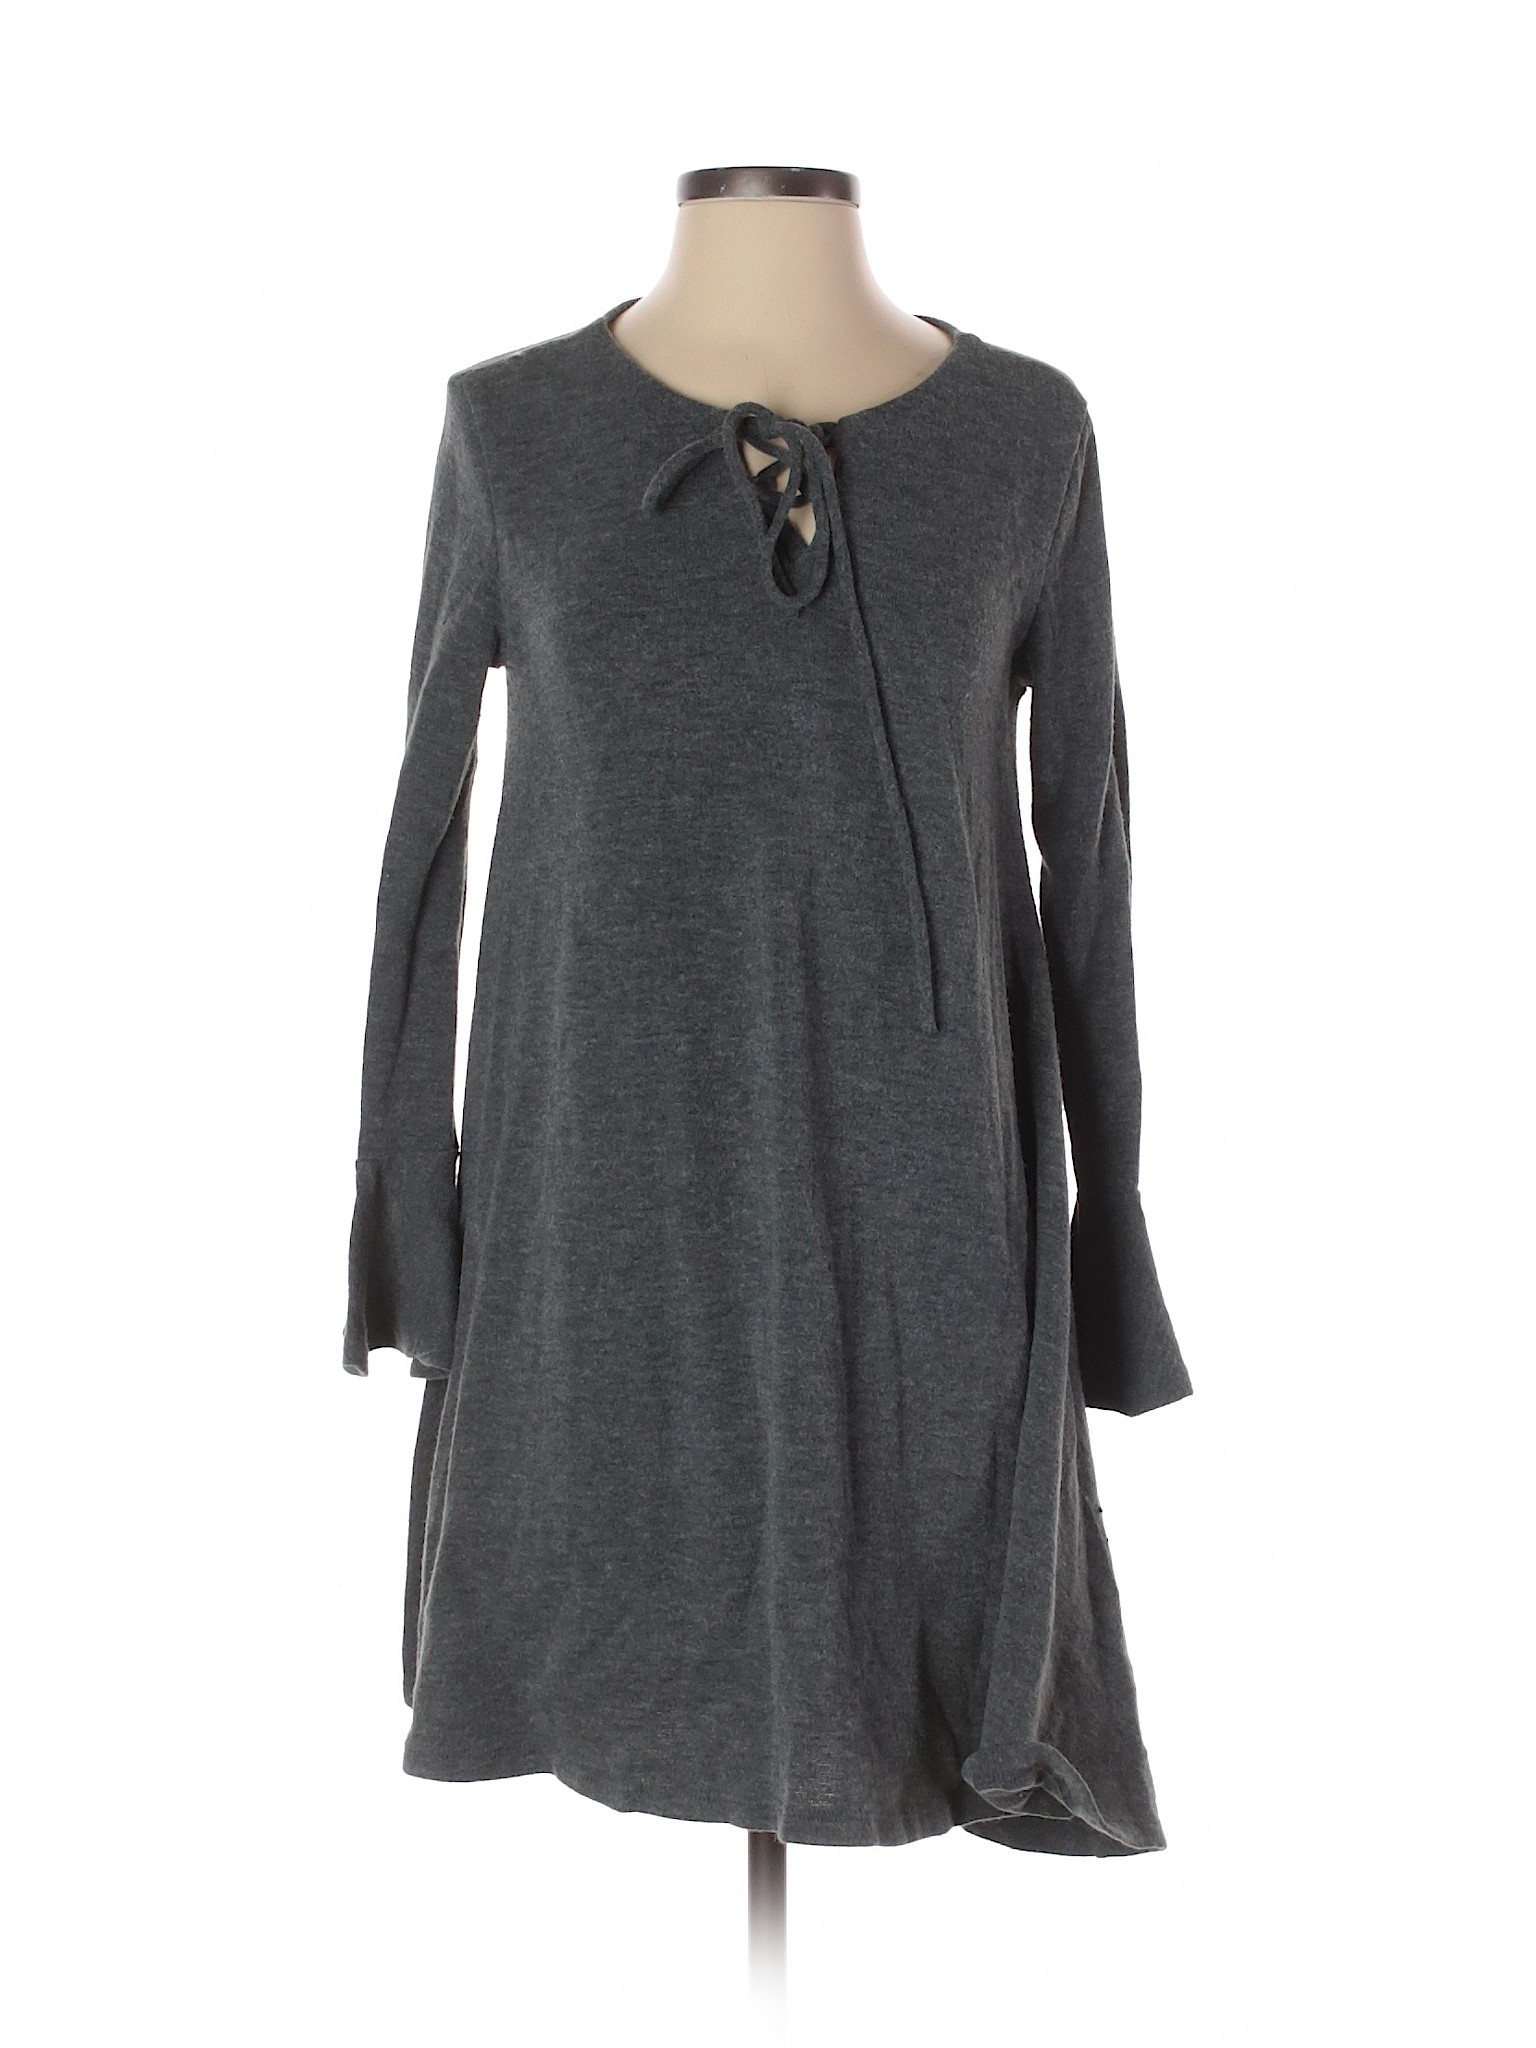 Annabelle Women Gray Pullover Hoodie S | eBay